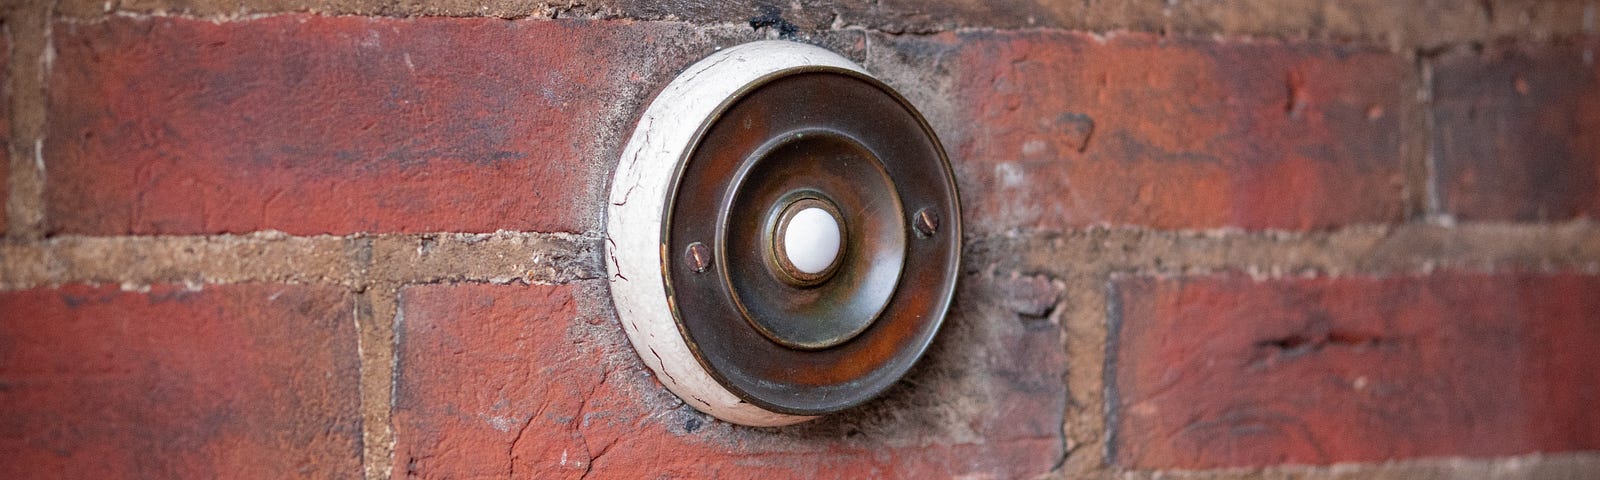 A doorbell